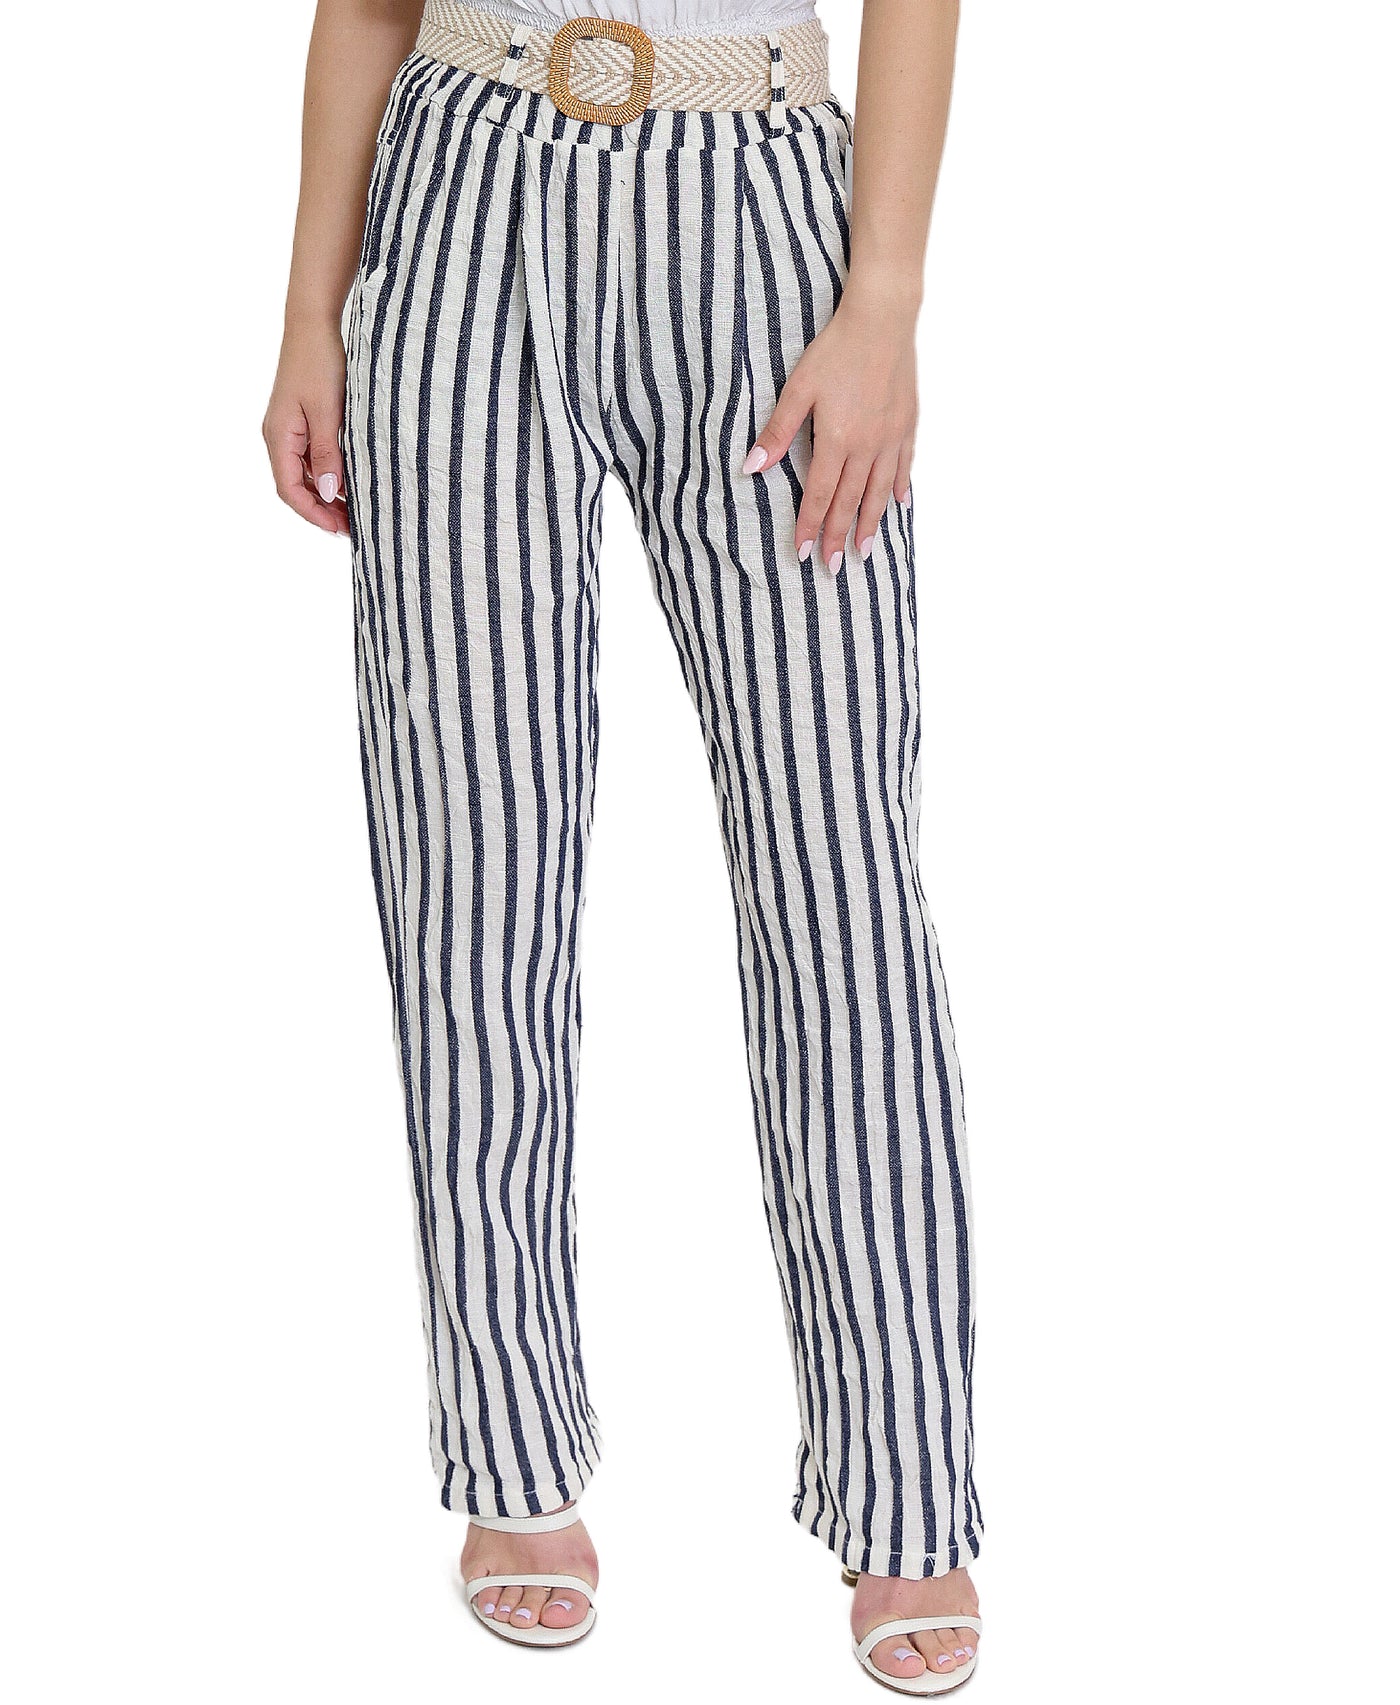 Striped Pants w/ Belt image 1